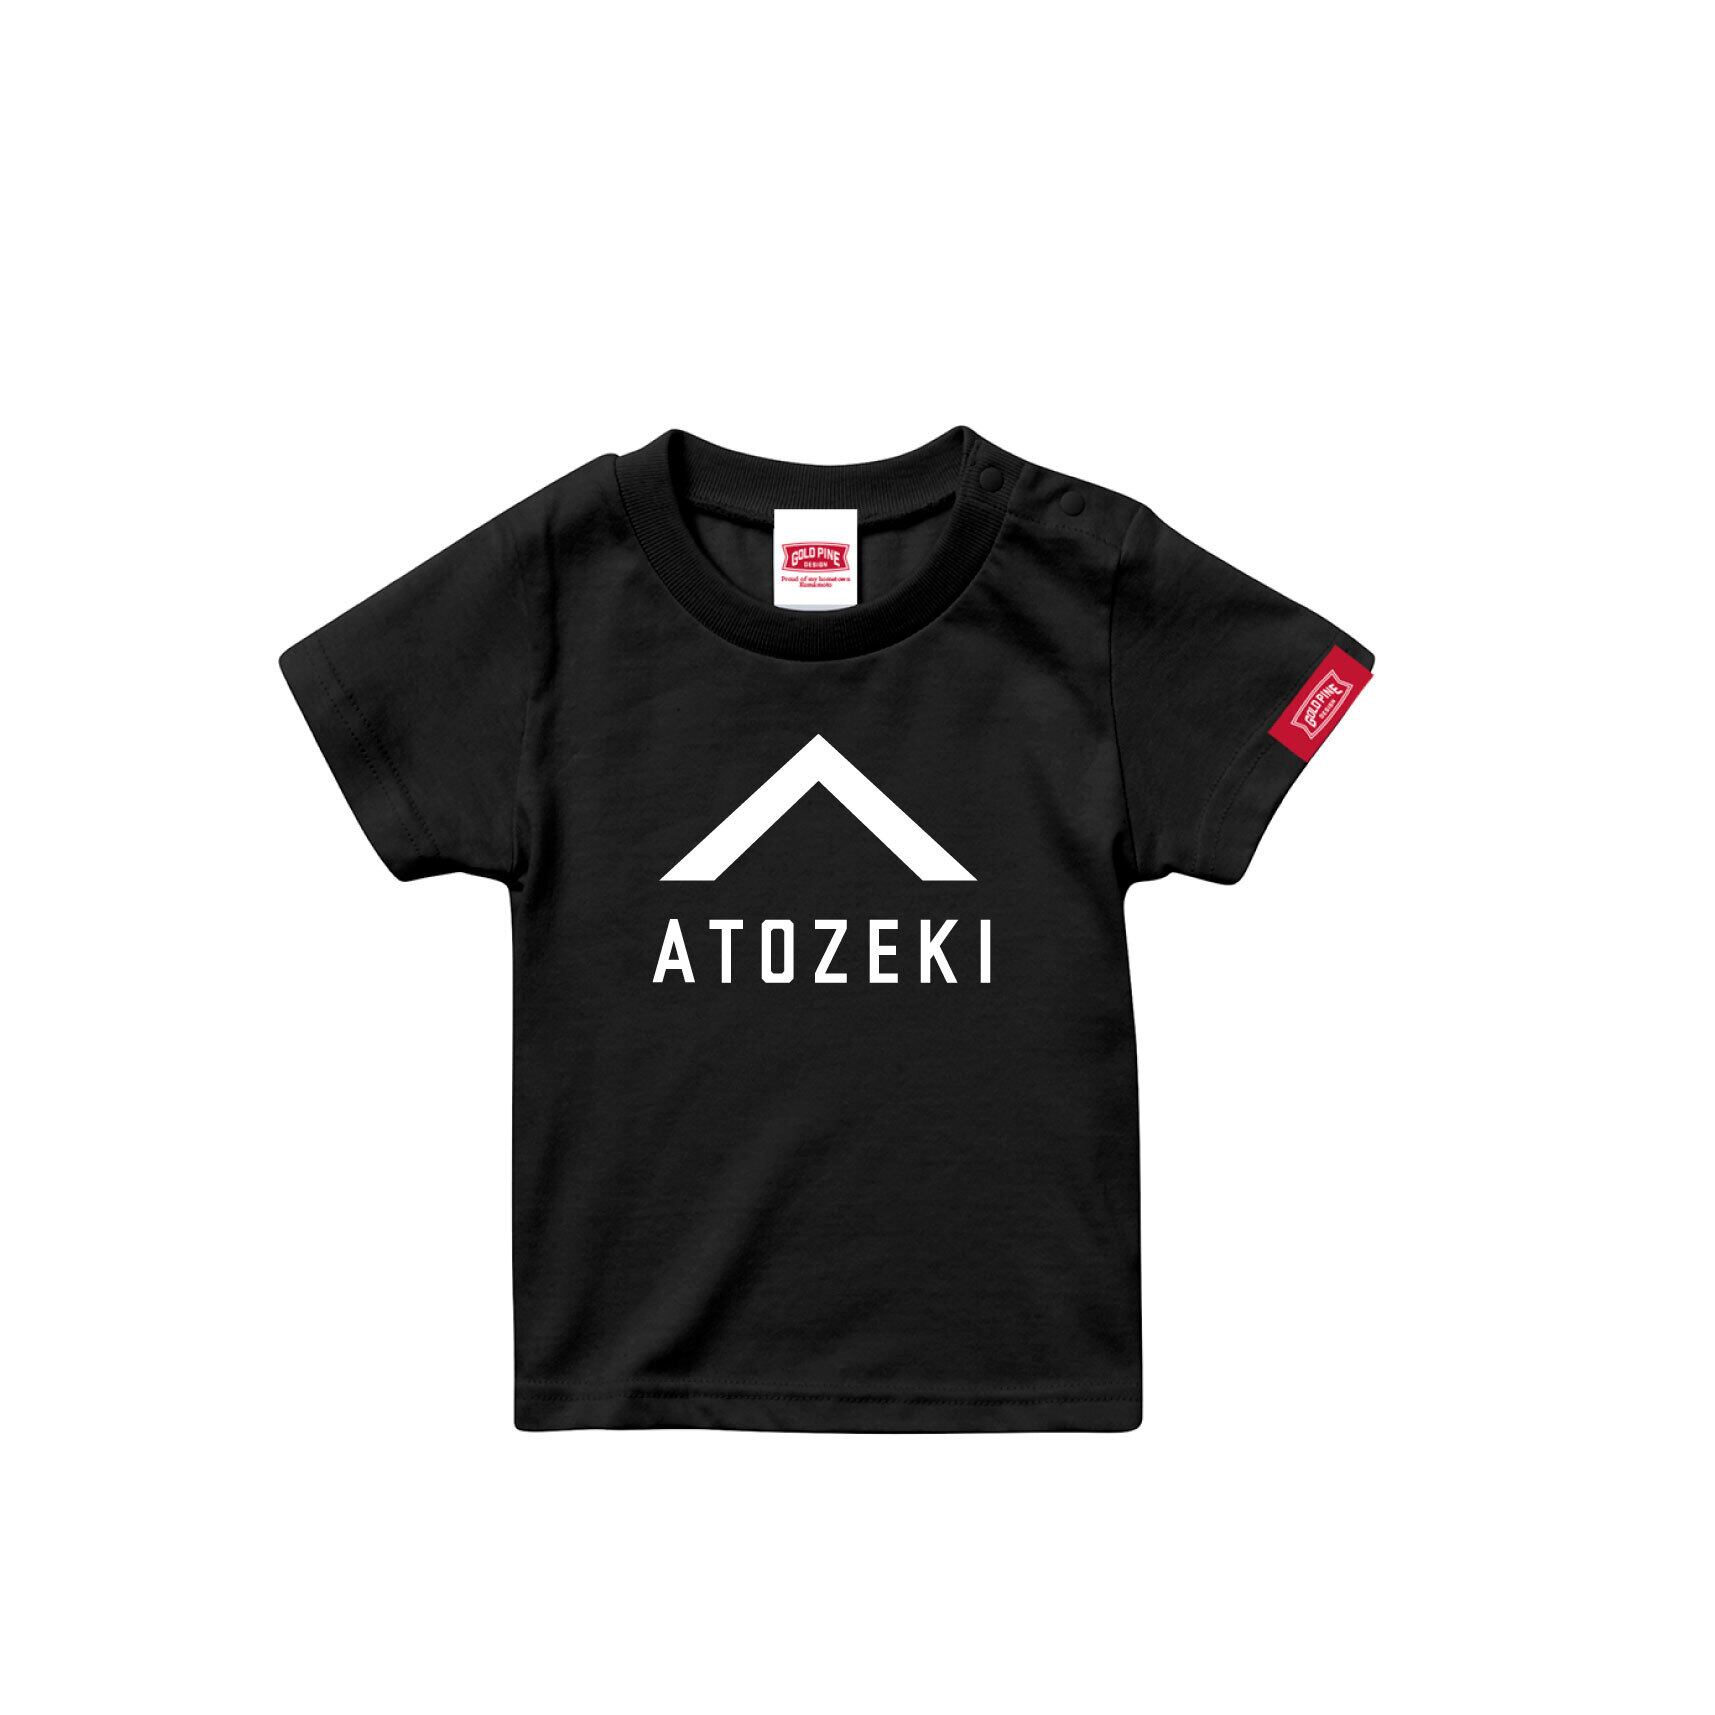 ATOZEKI-Tshirt【Kids】Black